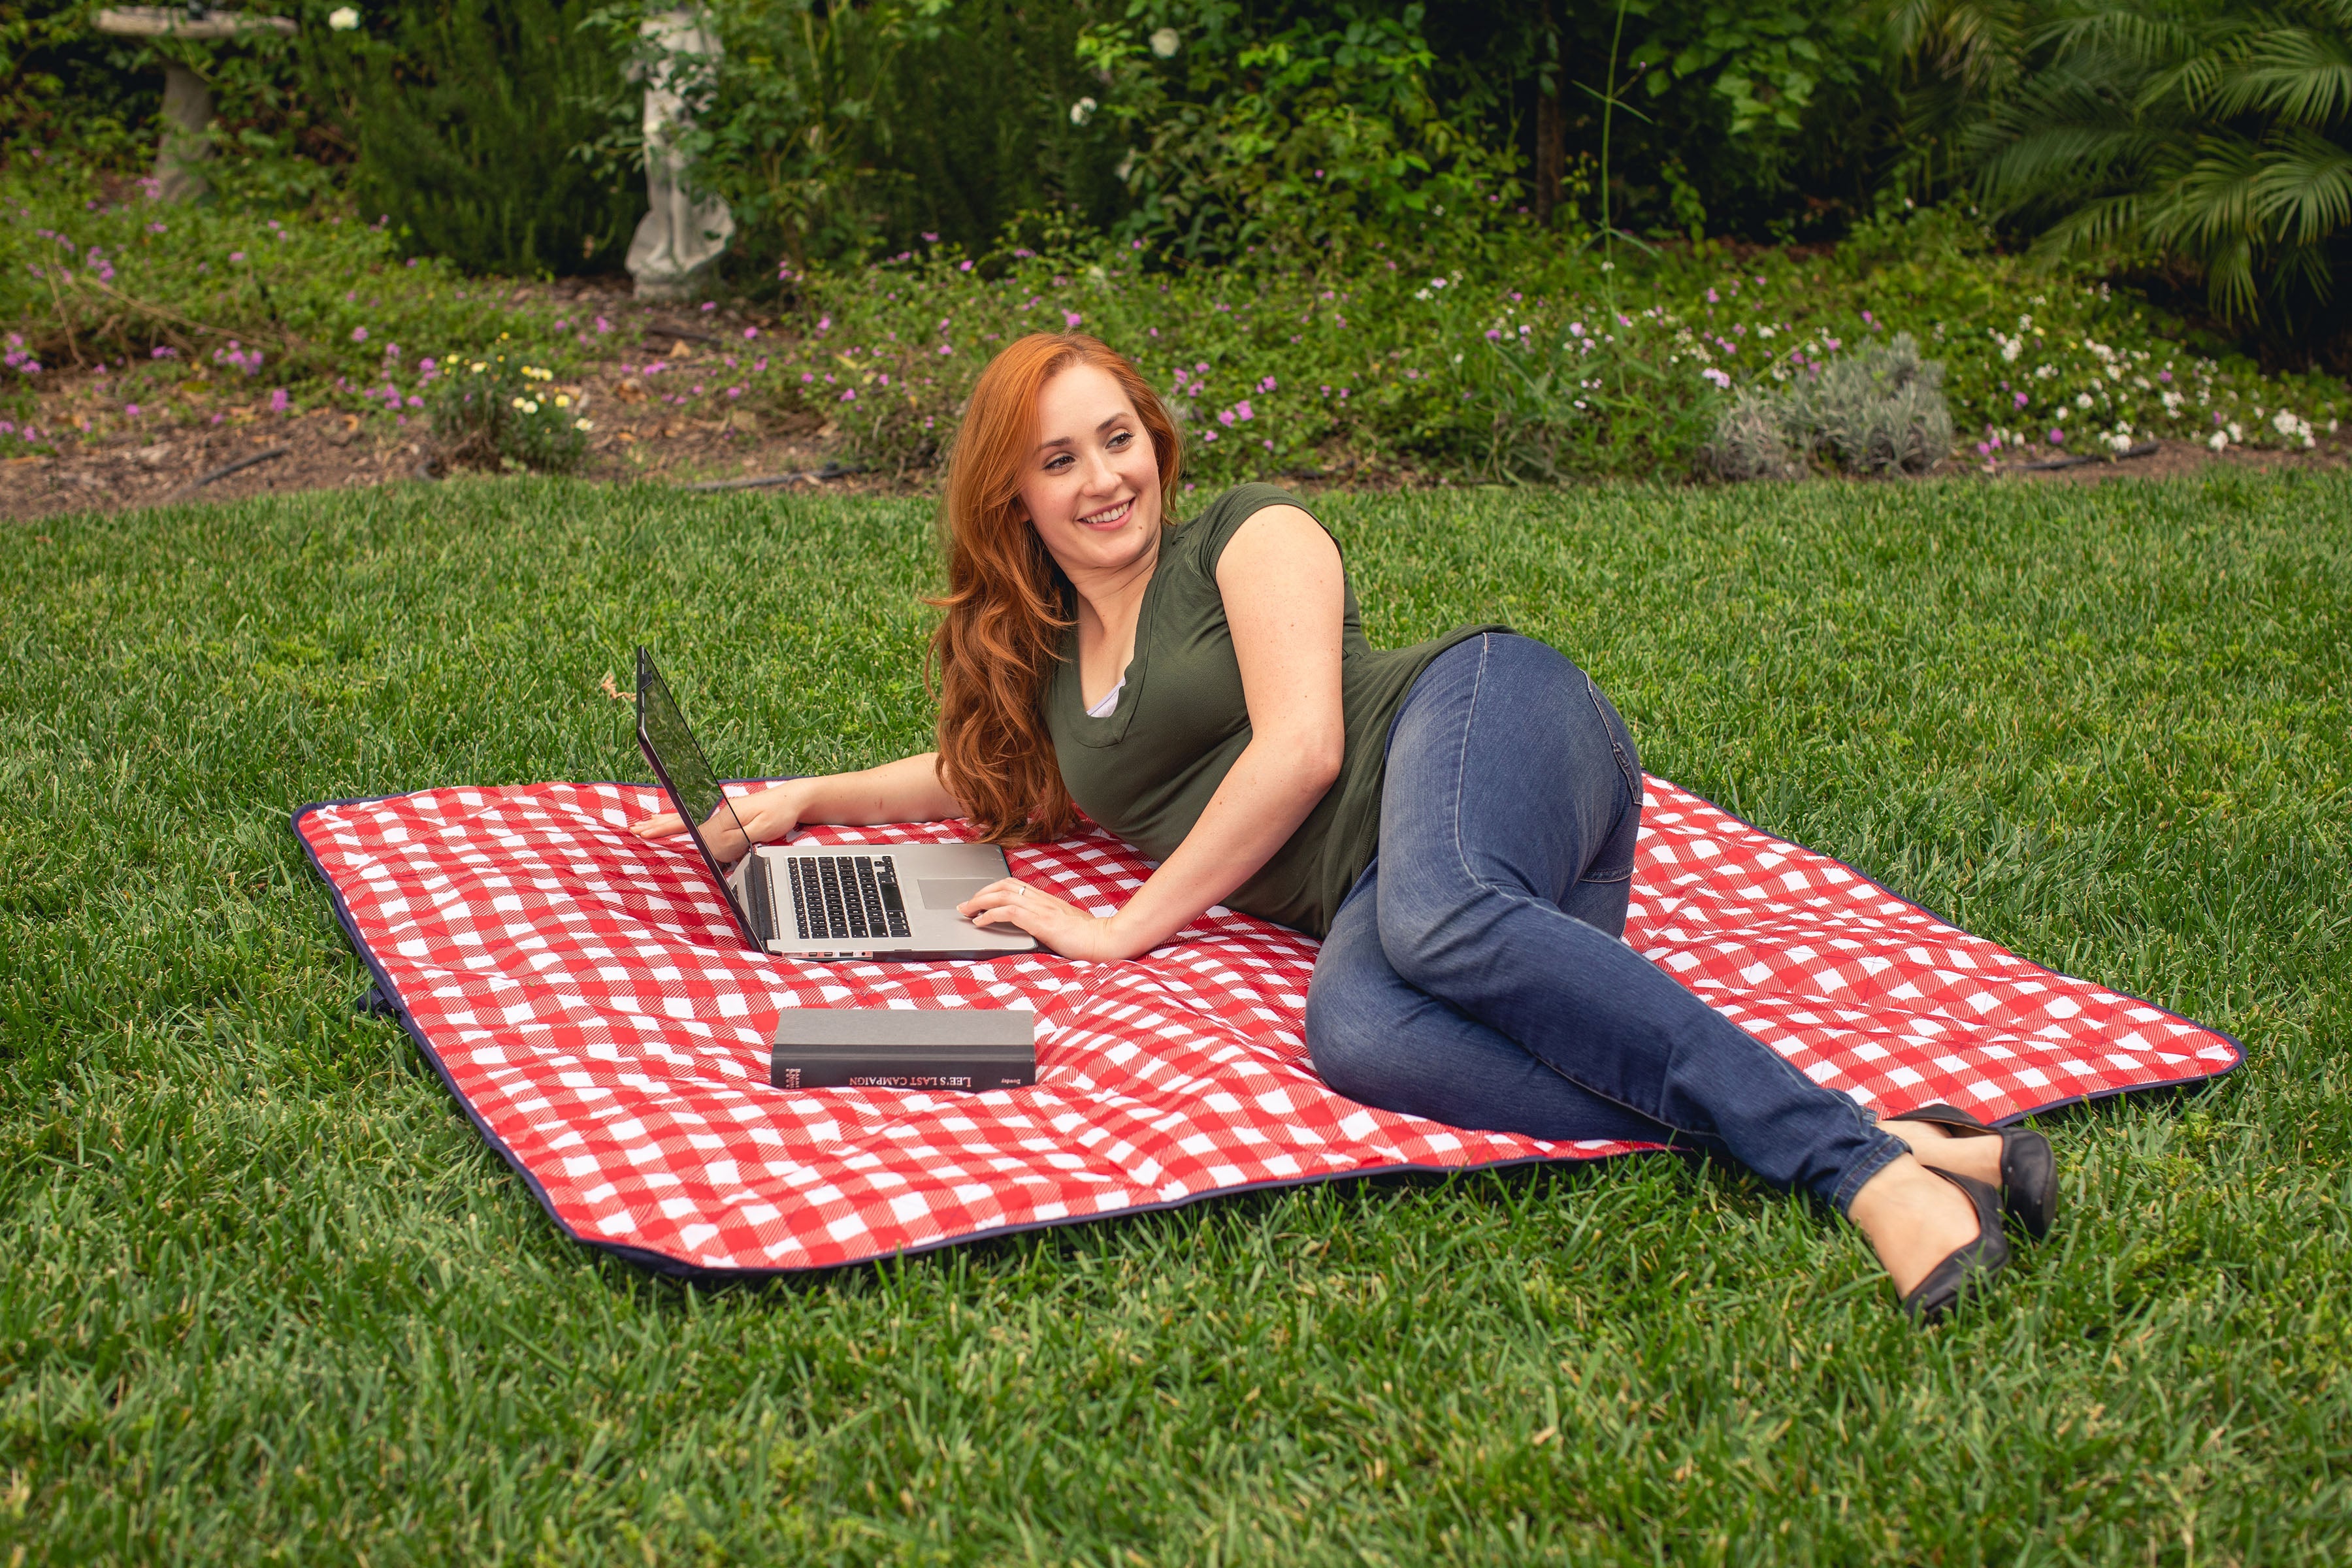 Central Perk - Friends - Vista Outdoor Picnic Blanket & Tote